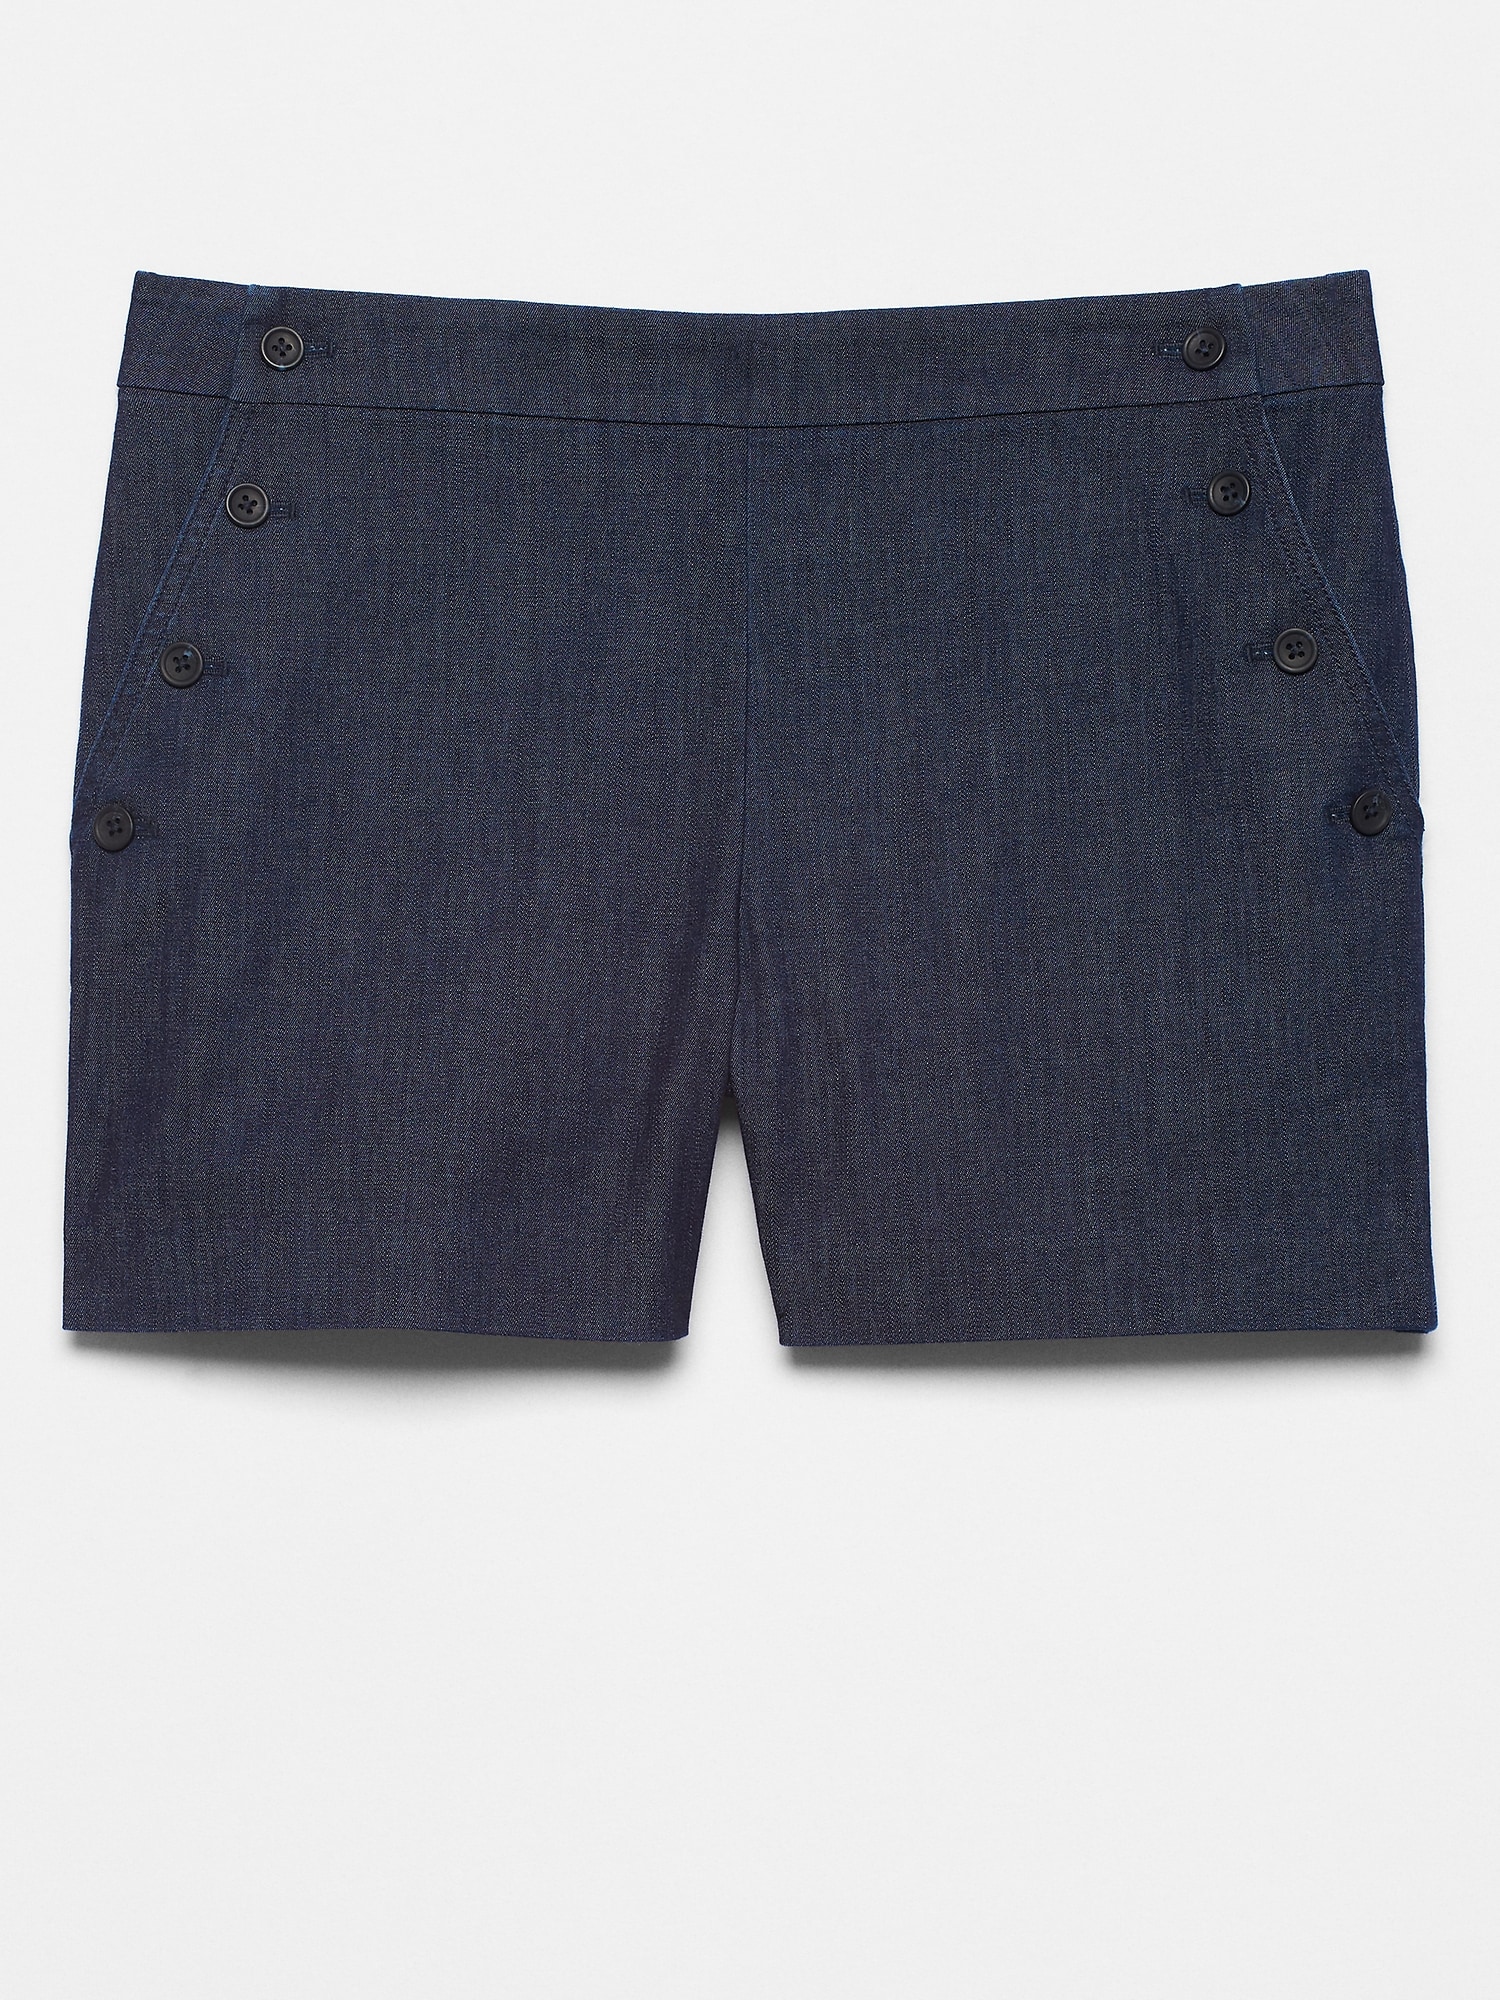 Chambray Sailor Shorts - 4 inch inseam